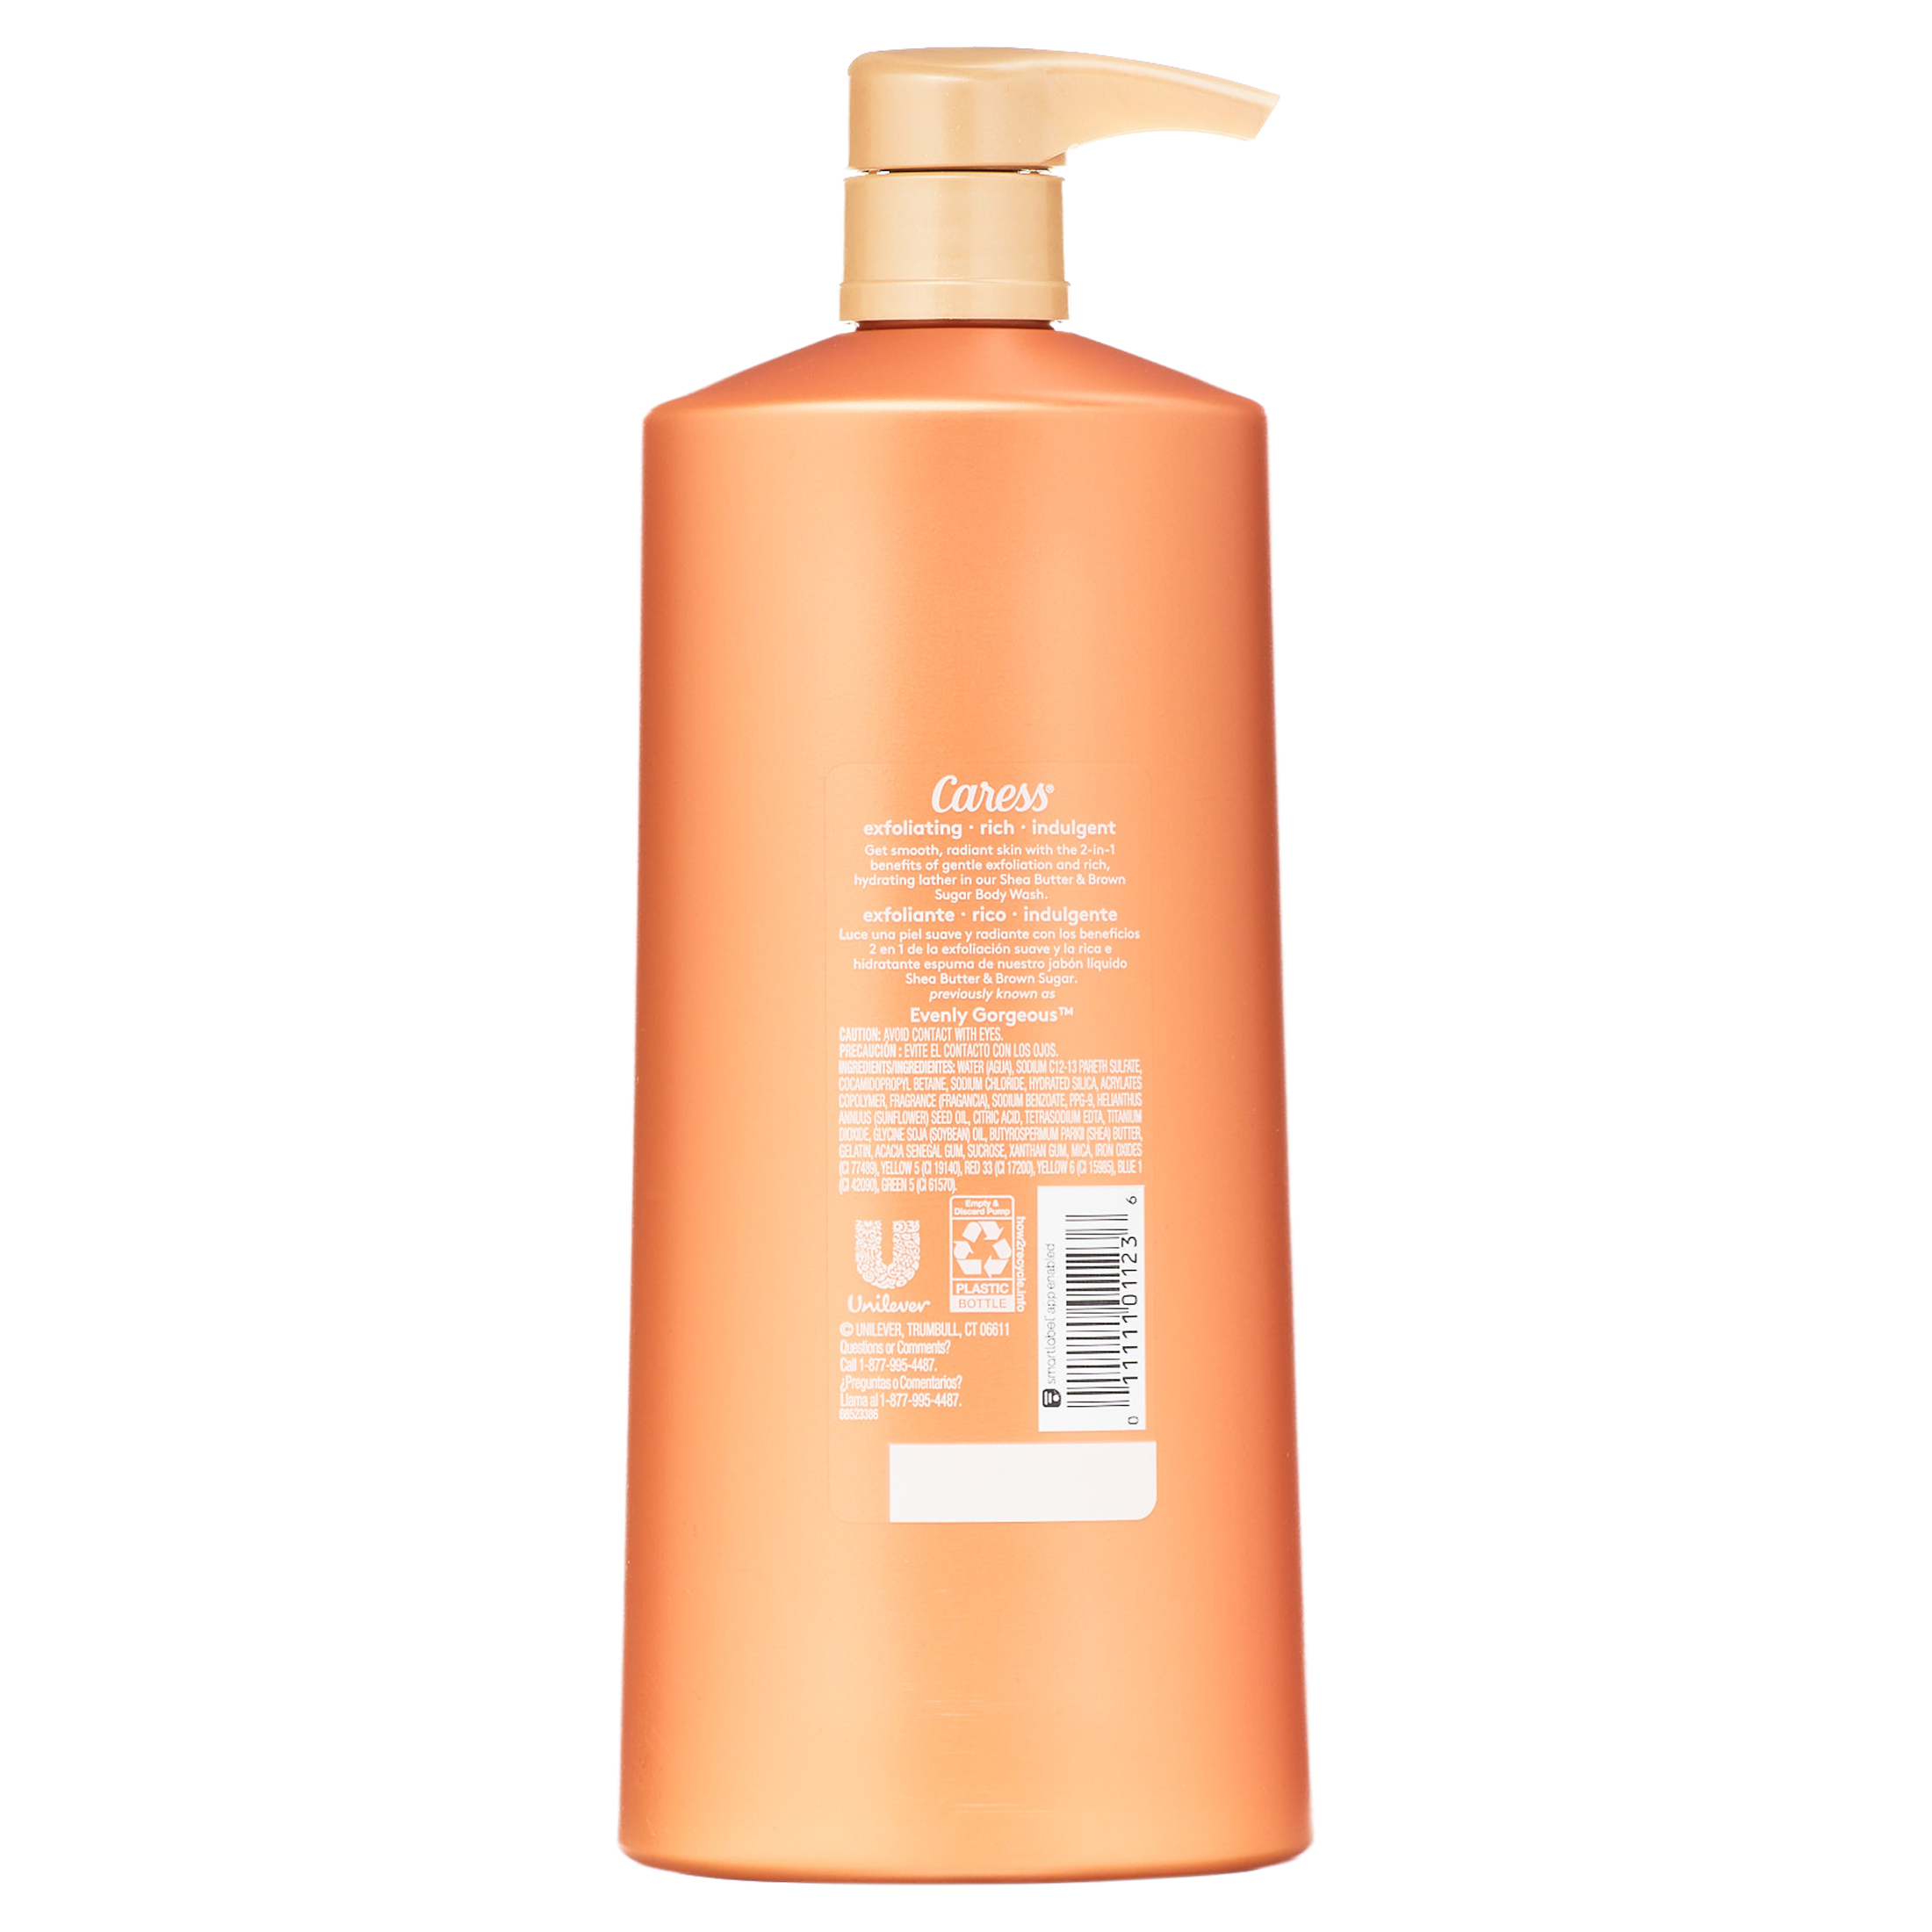 Caress Body Wash for Women, Shea Butter & Brown Sugar Shower Gel for Dry Skin 25.4 fl oz - image 3 of 4